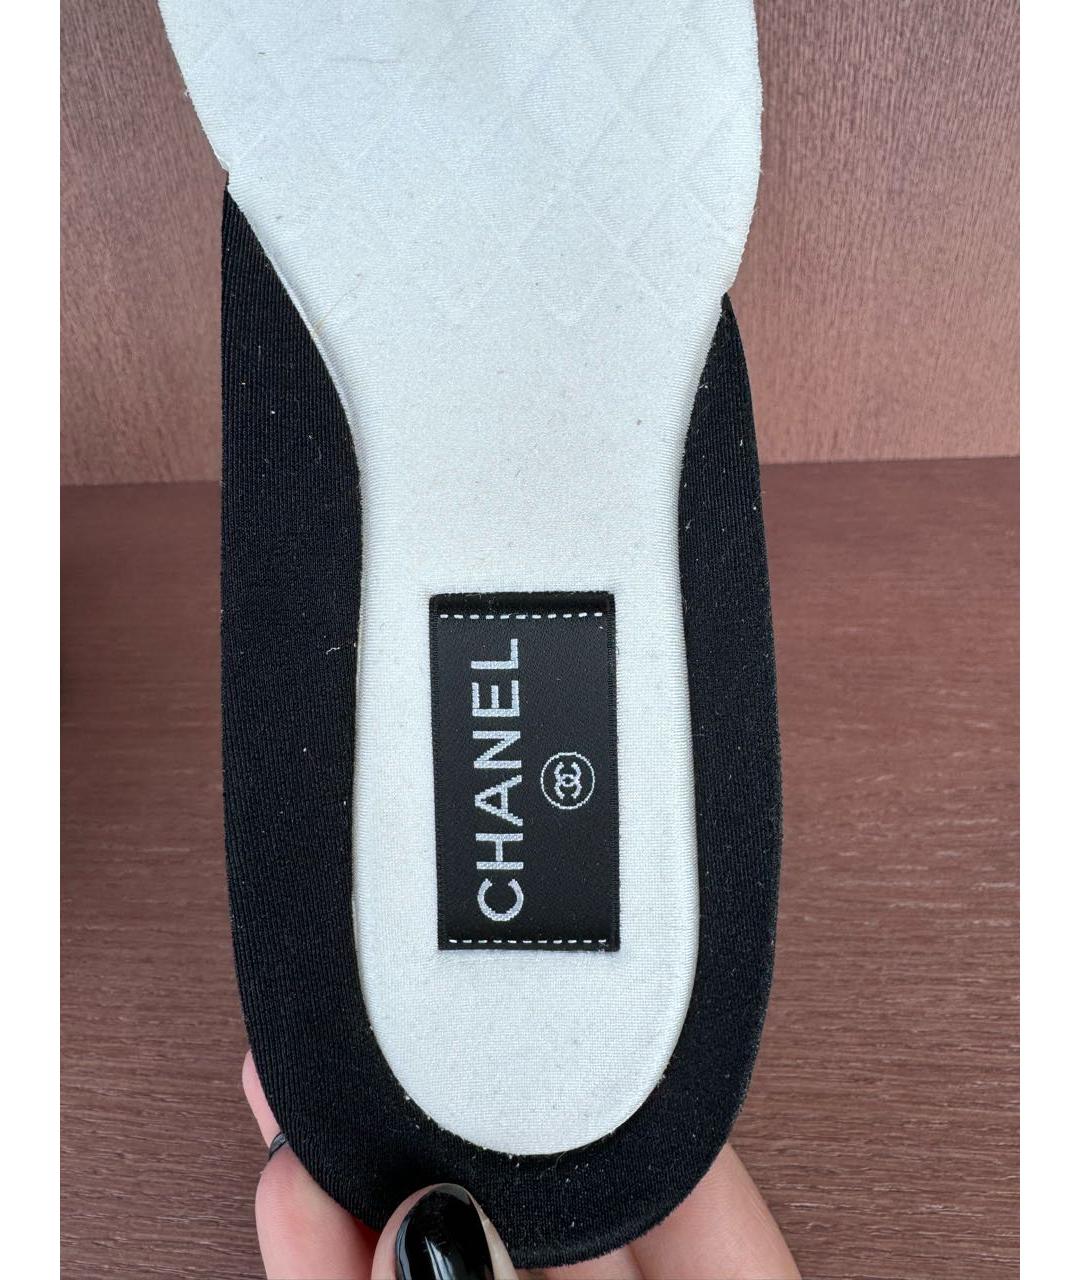 CHANEL PRE-OWNED Белые кожаные кроссовки, фото 4